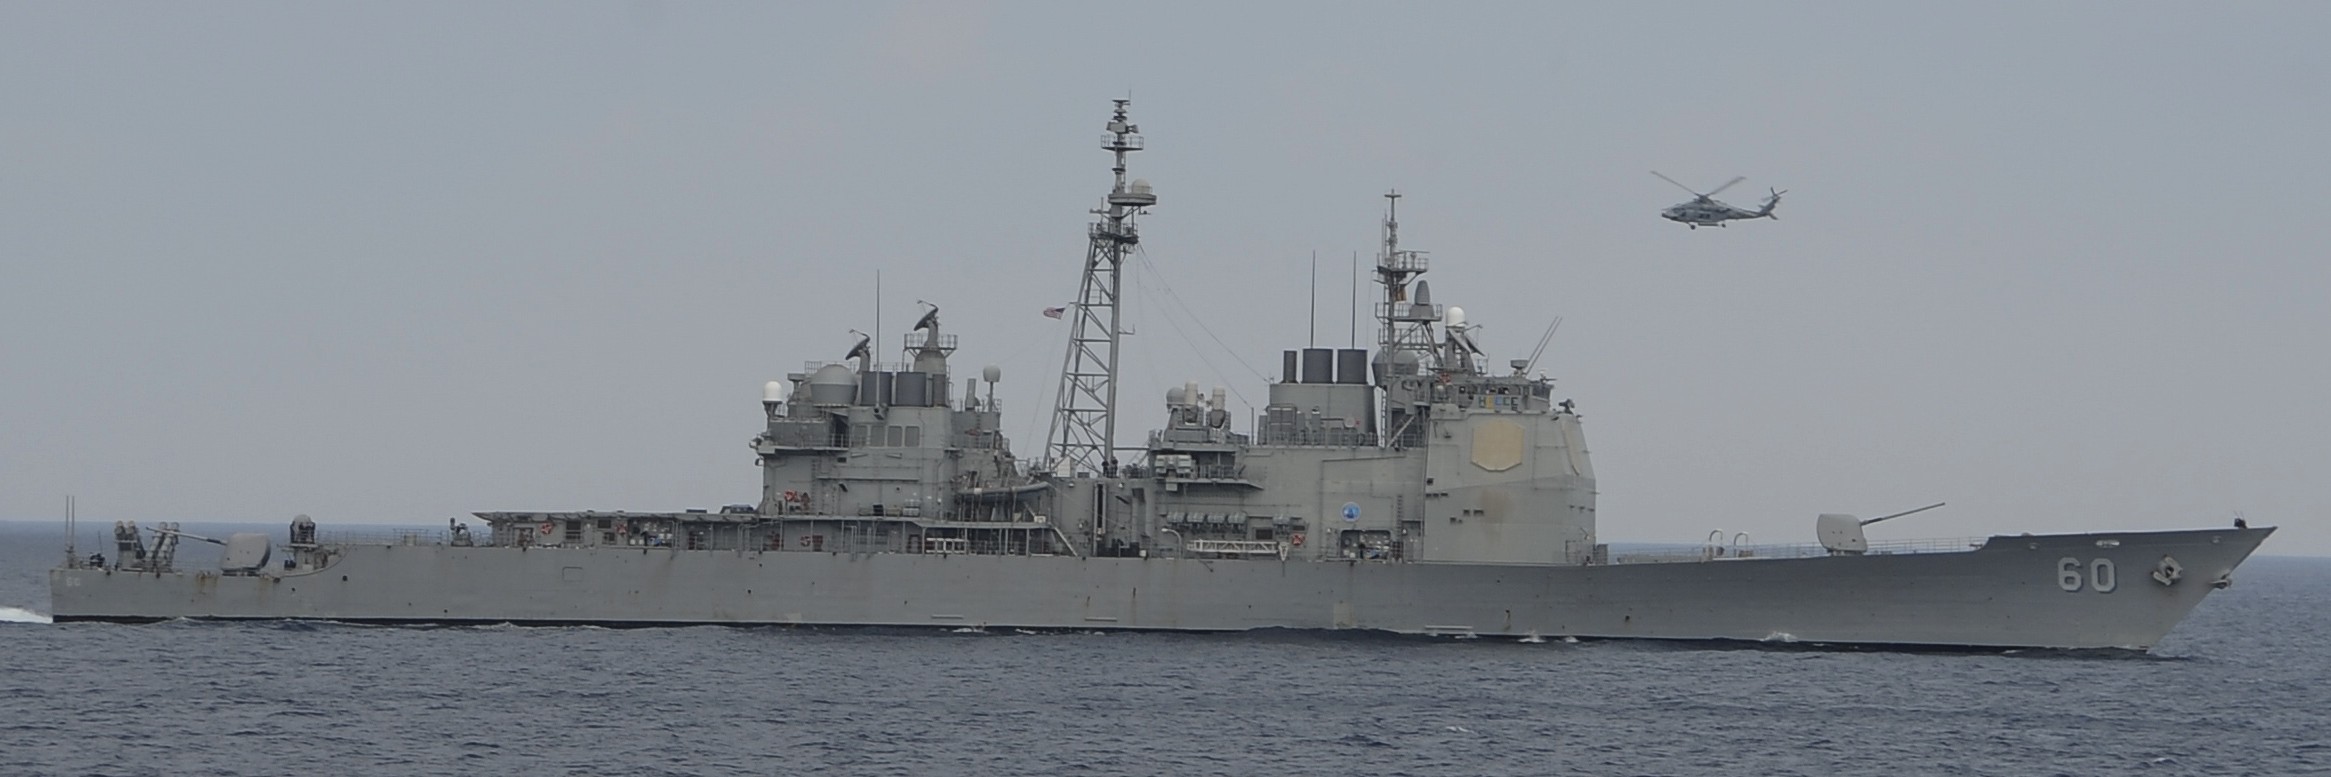 cg-60 uss normandy ticonderoga class guided missile cruiser aegis us navy indian ocean 54